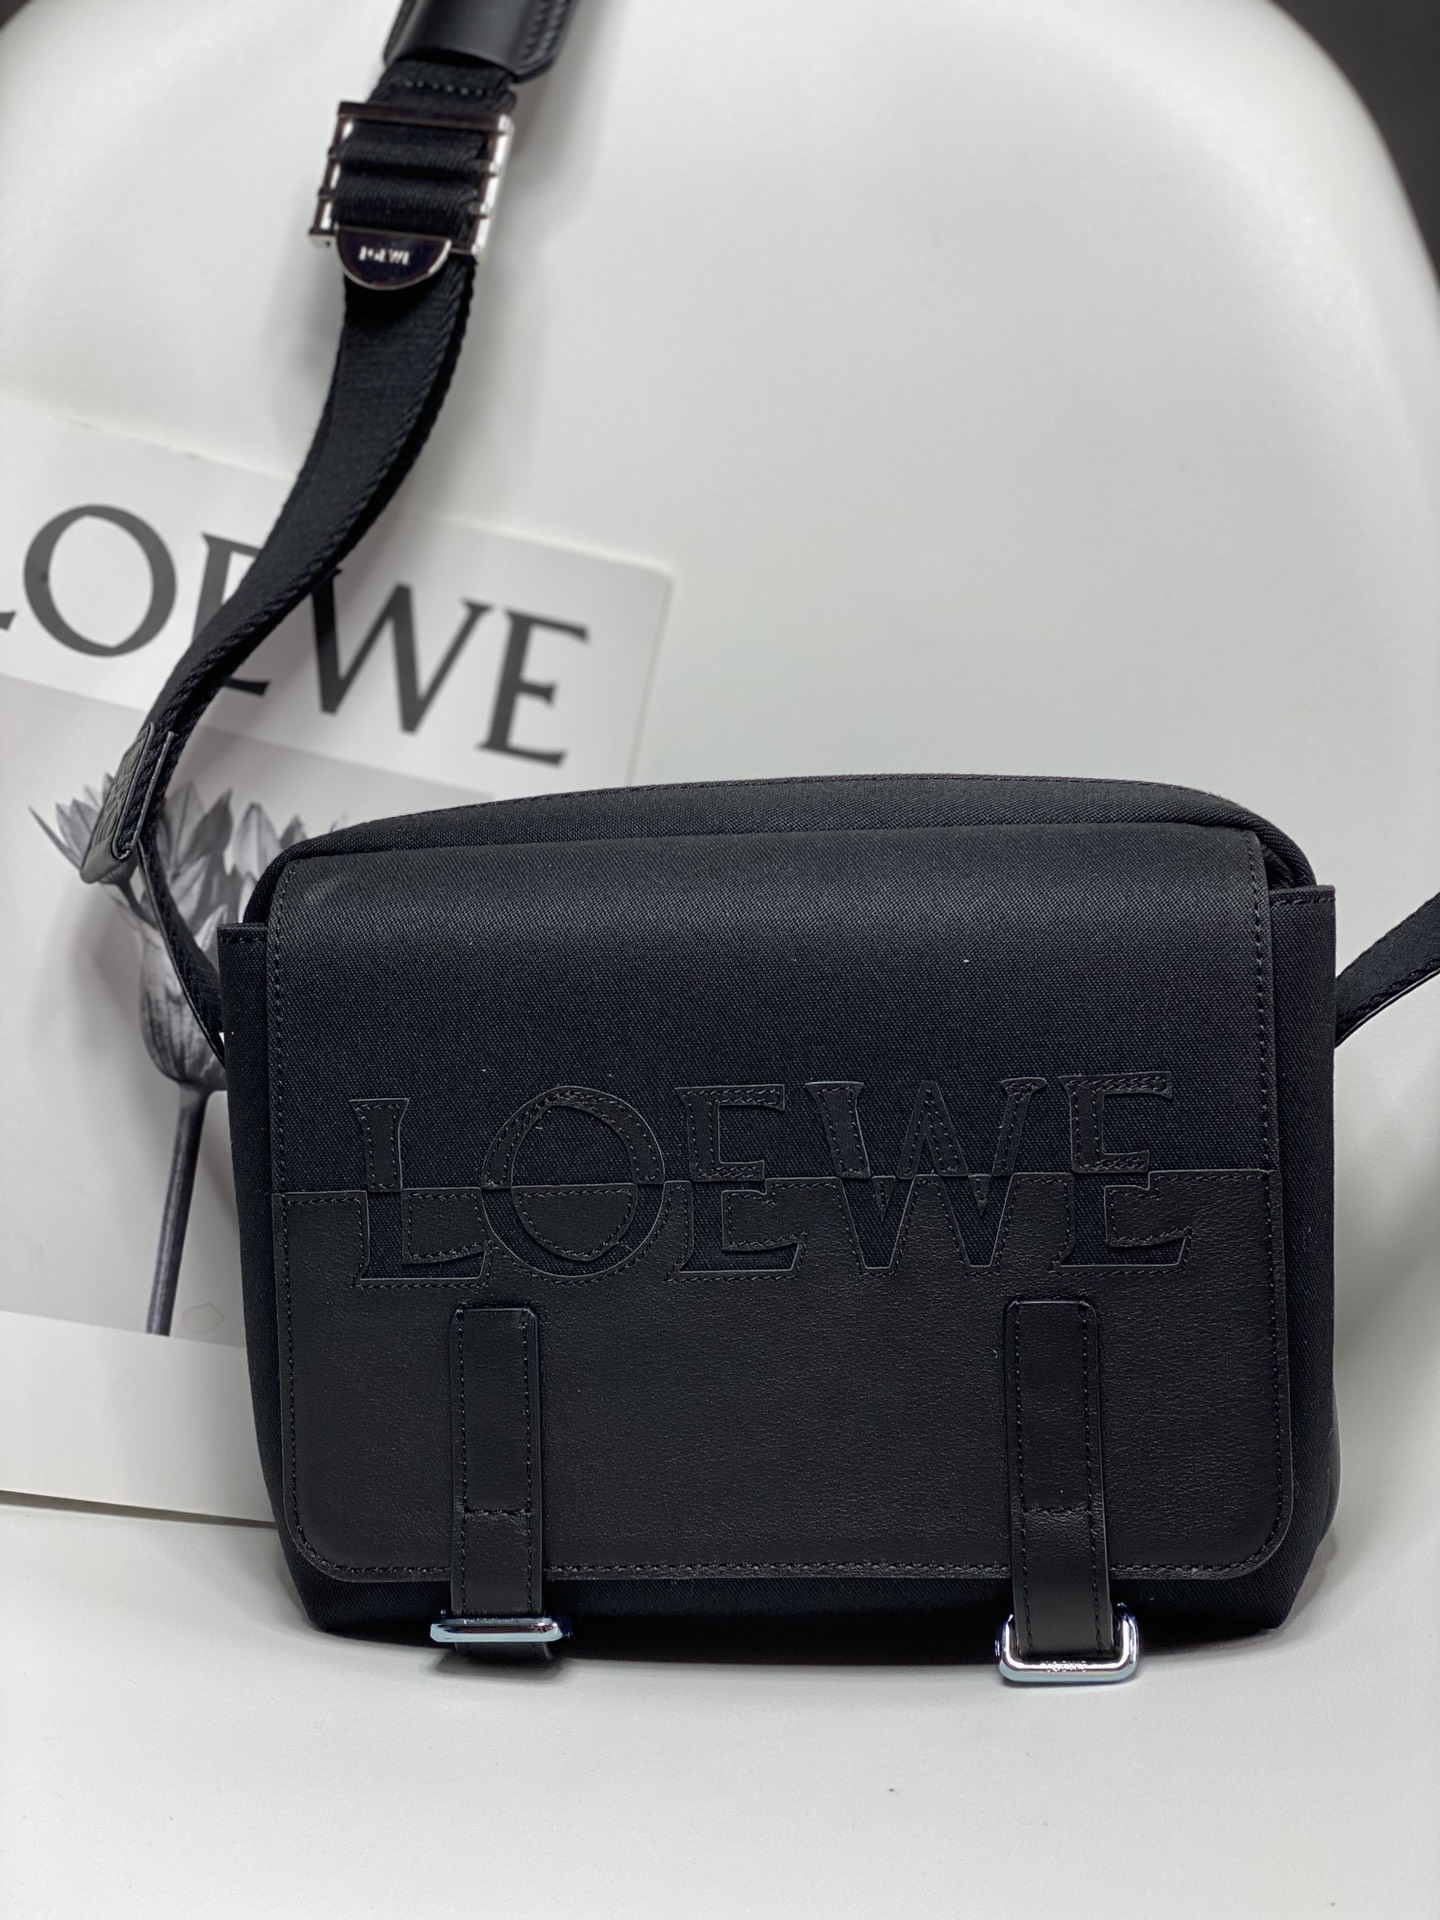 Loewe新款XS邮差包型号A79: